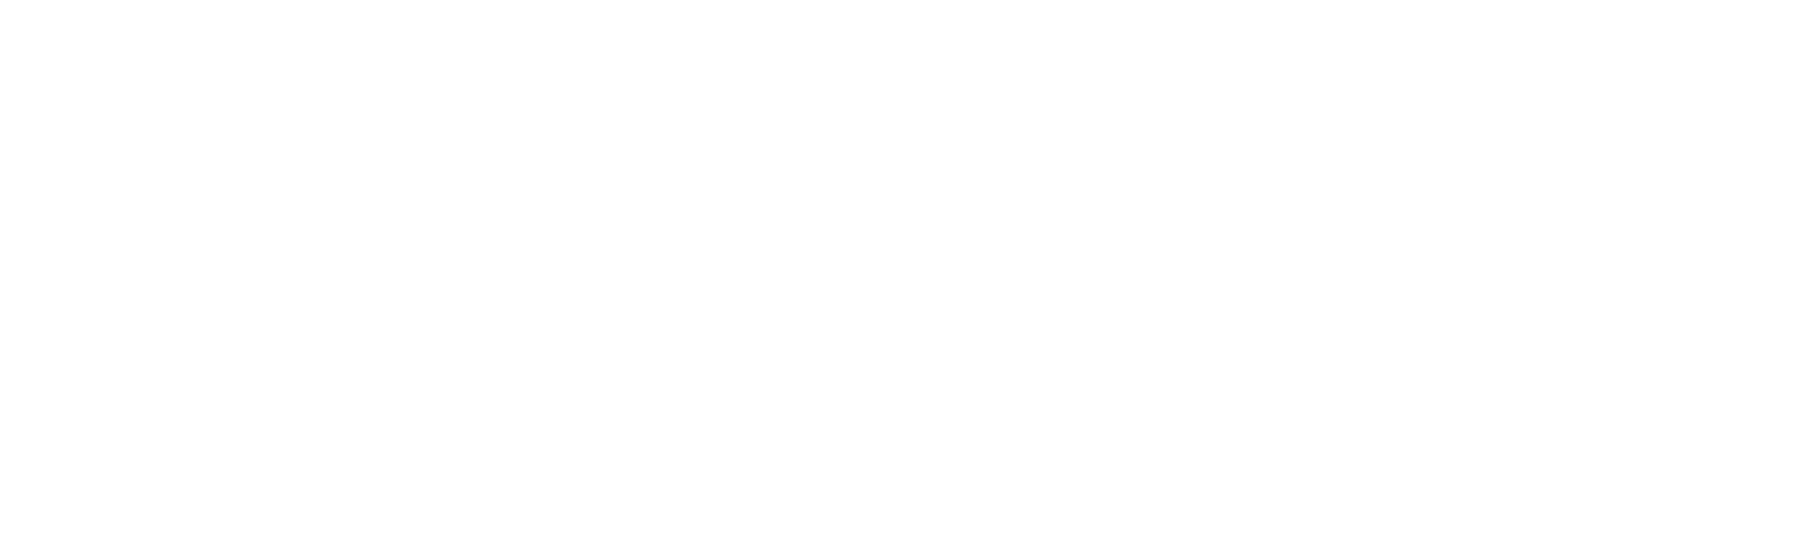 guidehouse marketplace logo